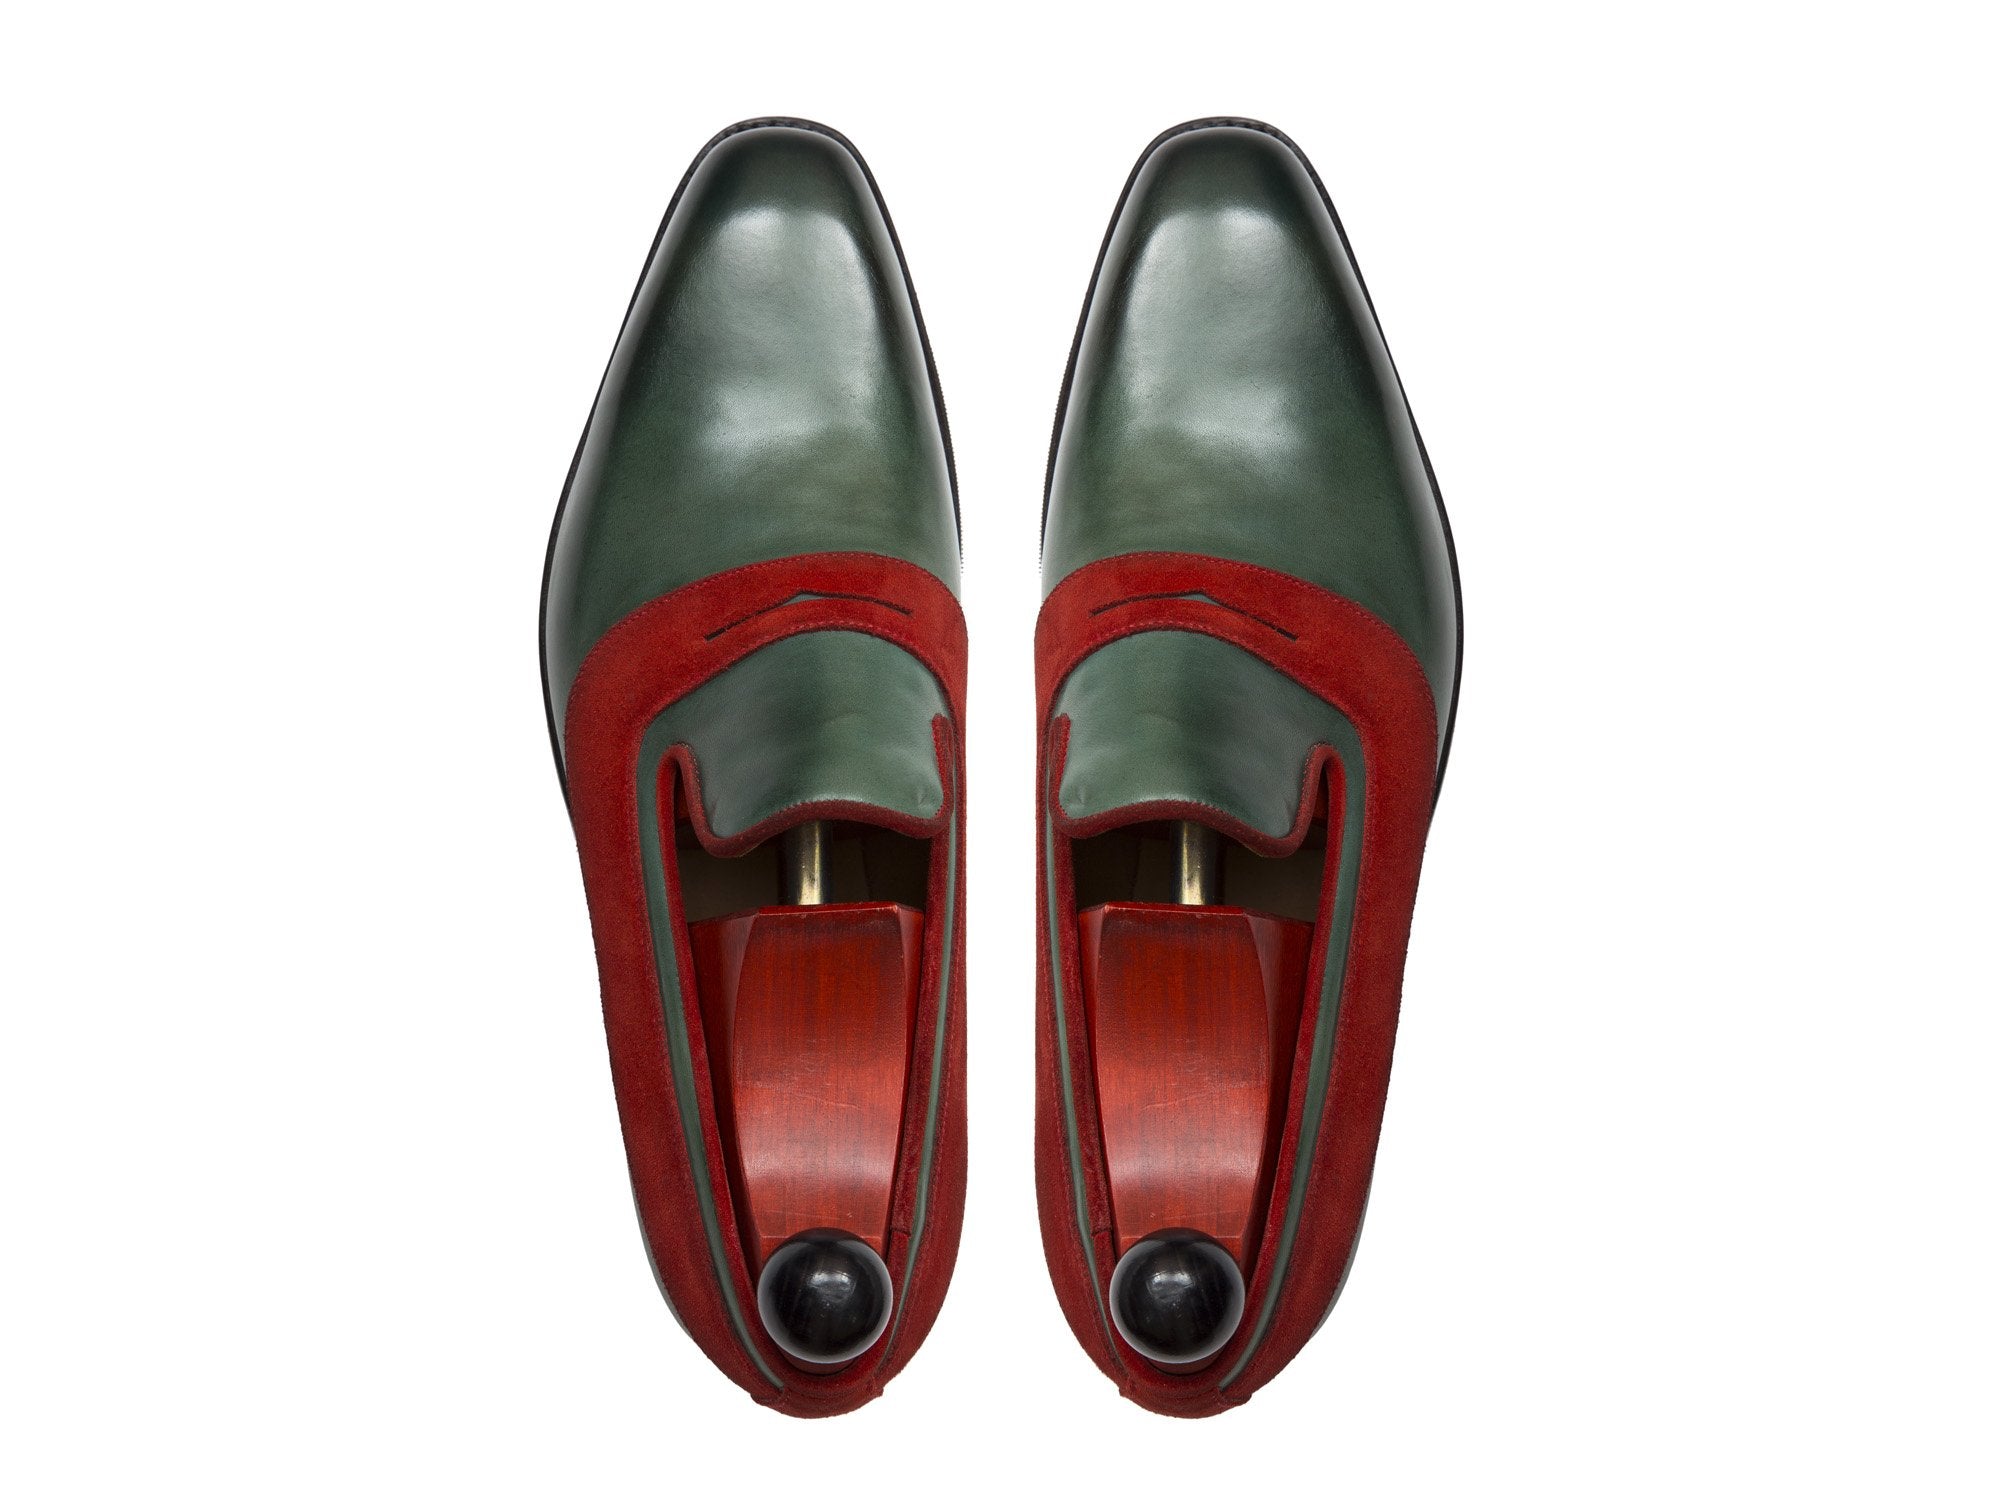 J.FitzPatrick Footwear - Marcos - Forest Green Calf / RedSuede LPB Last - City Rubber Sole